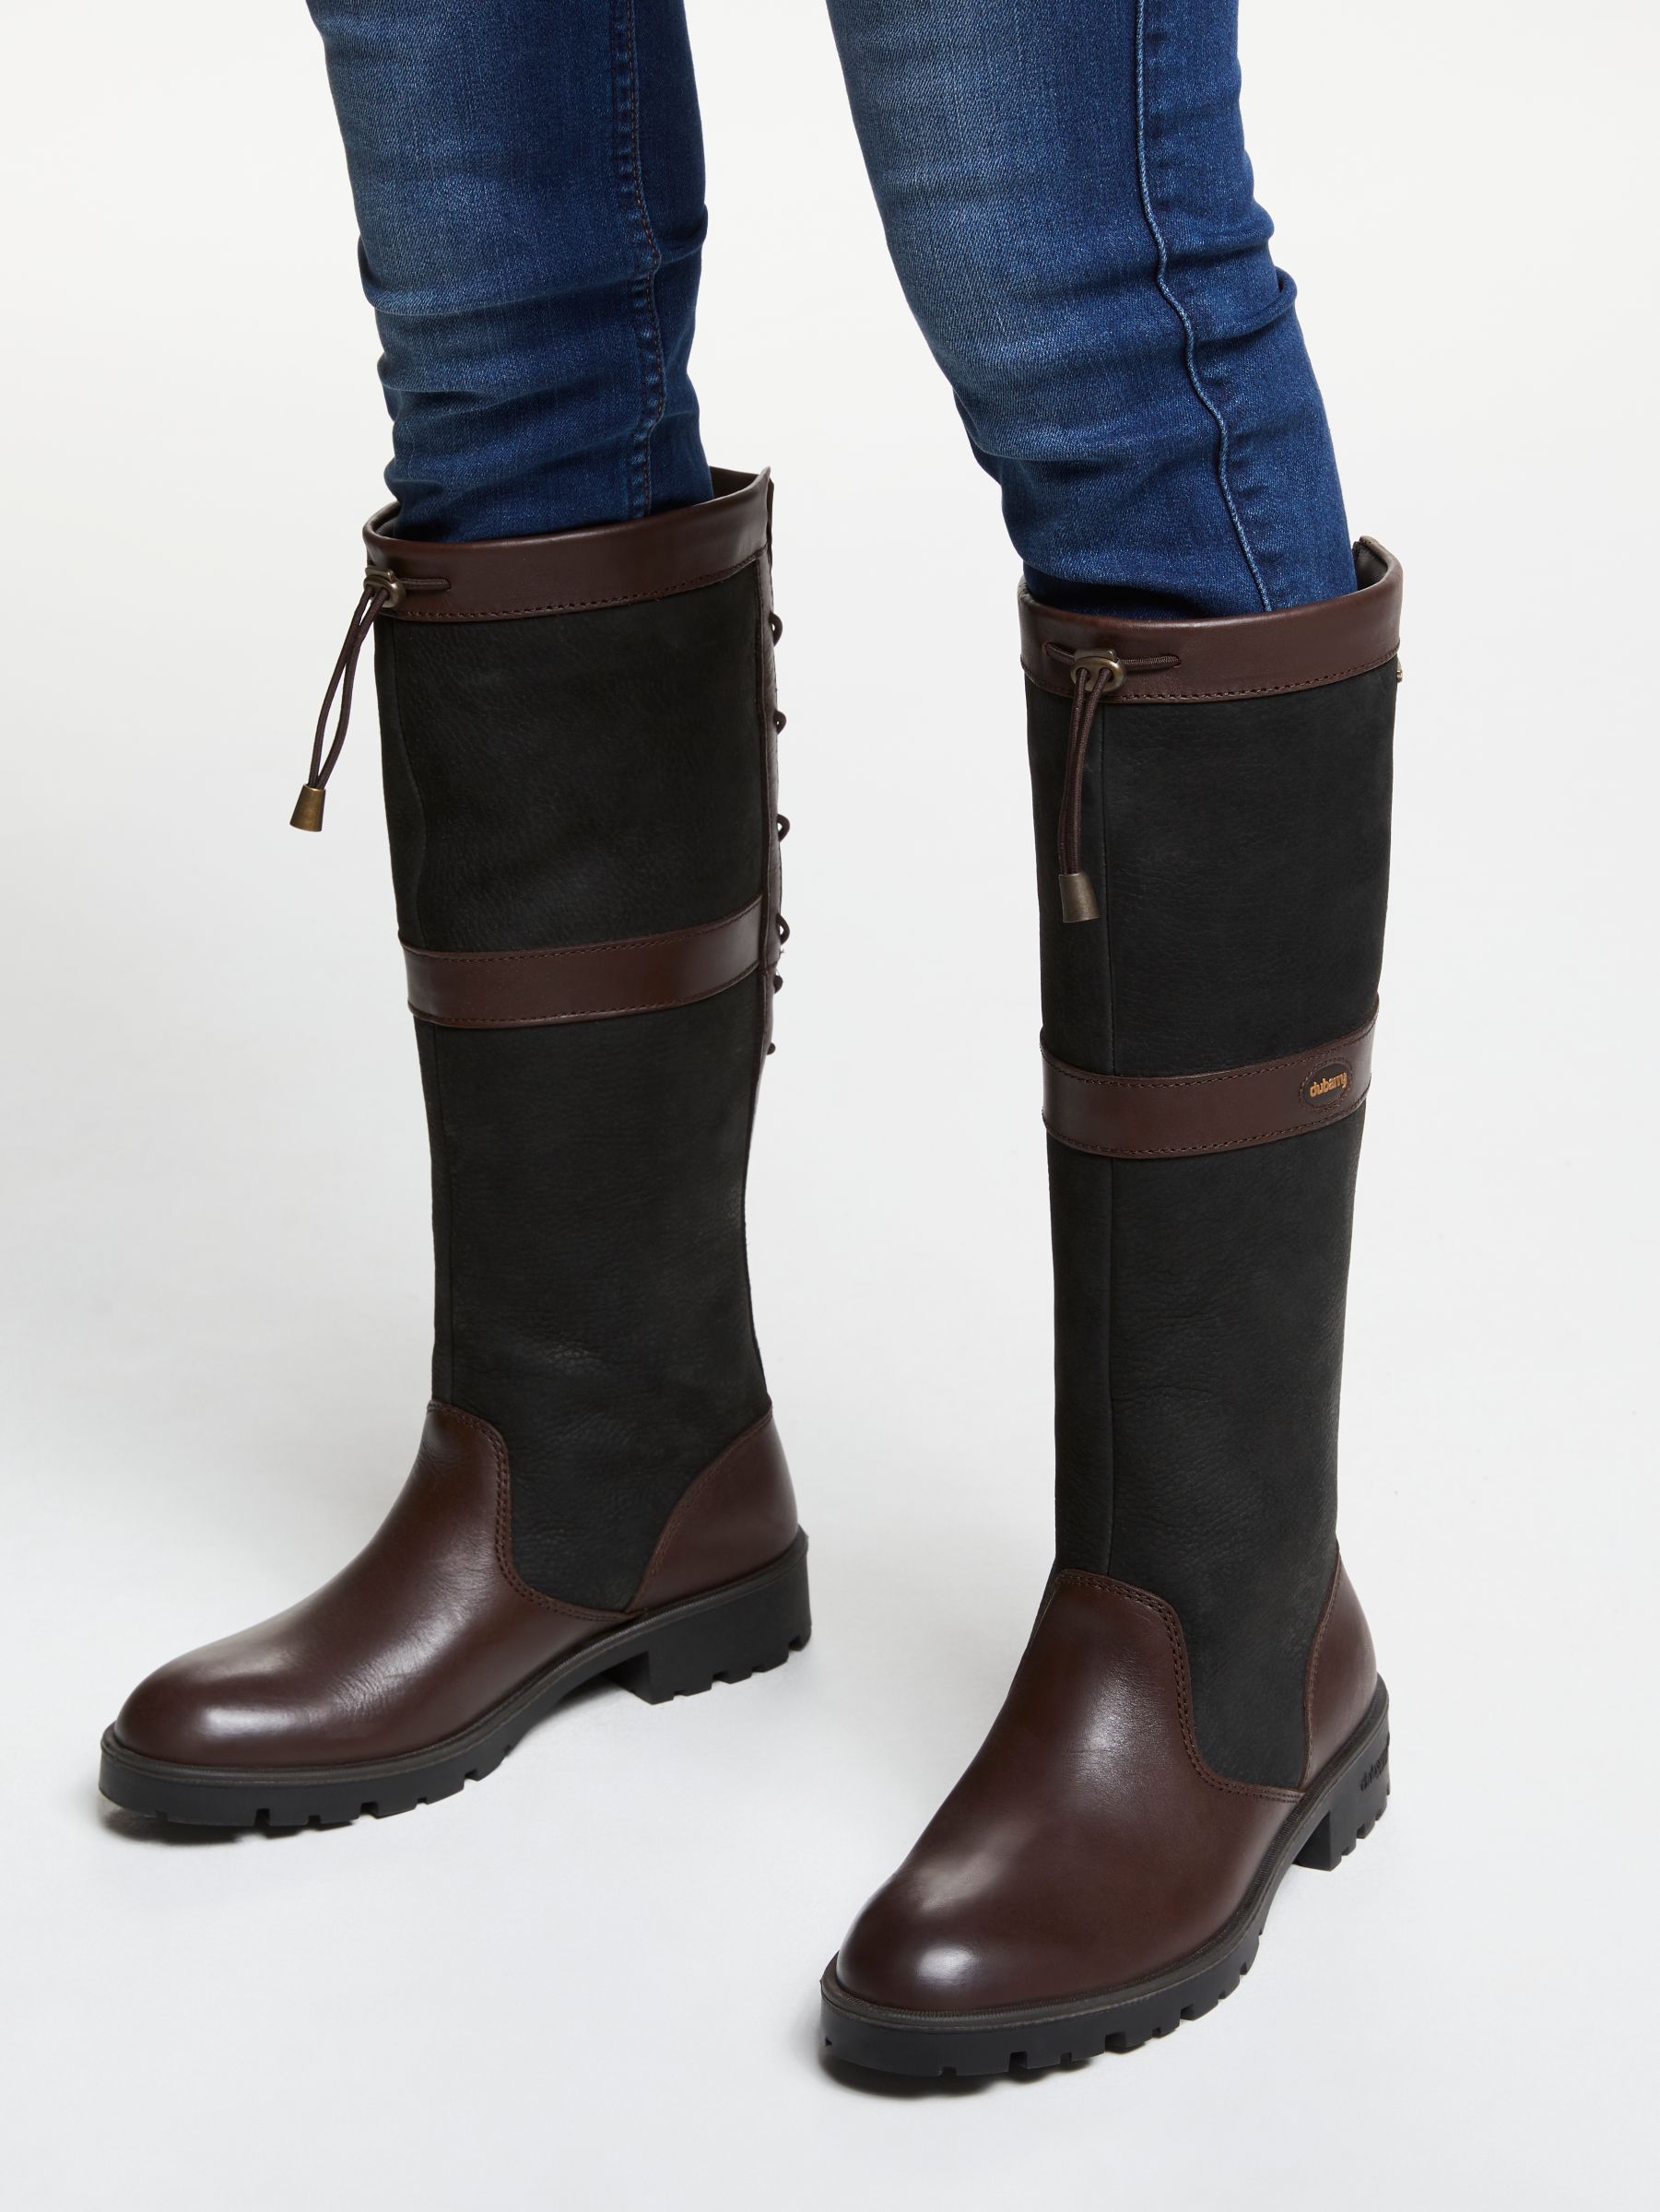 high waterproof boots